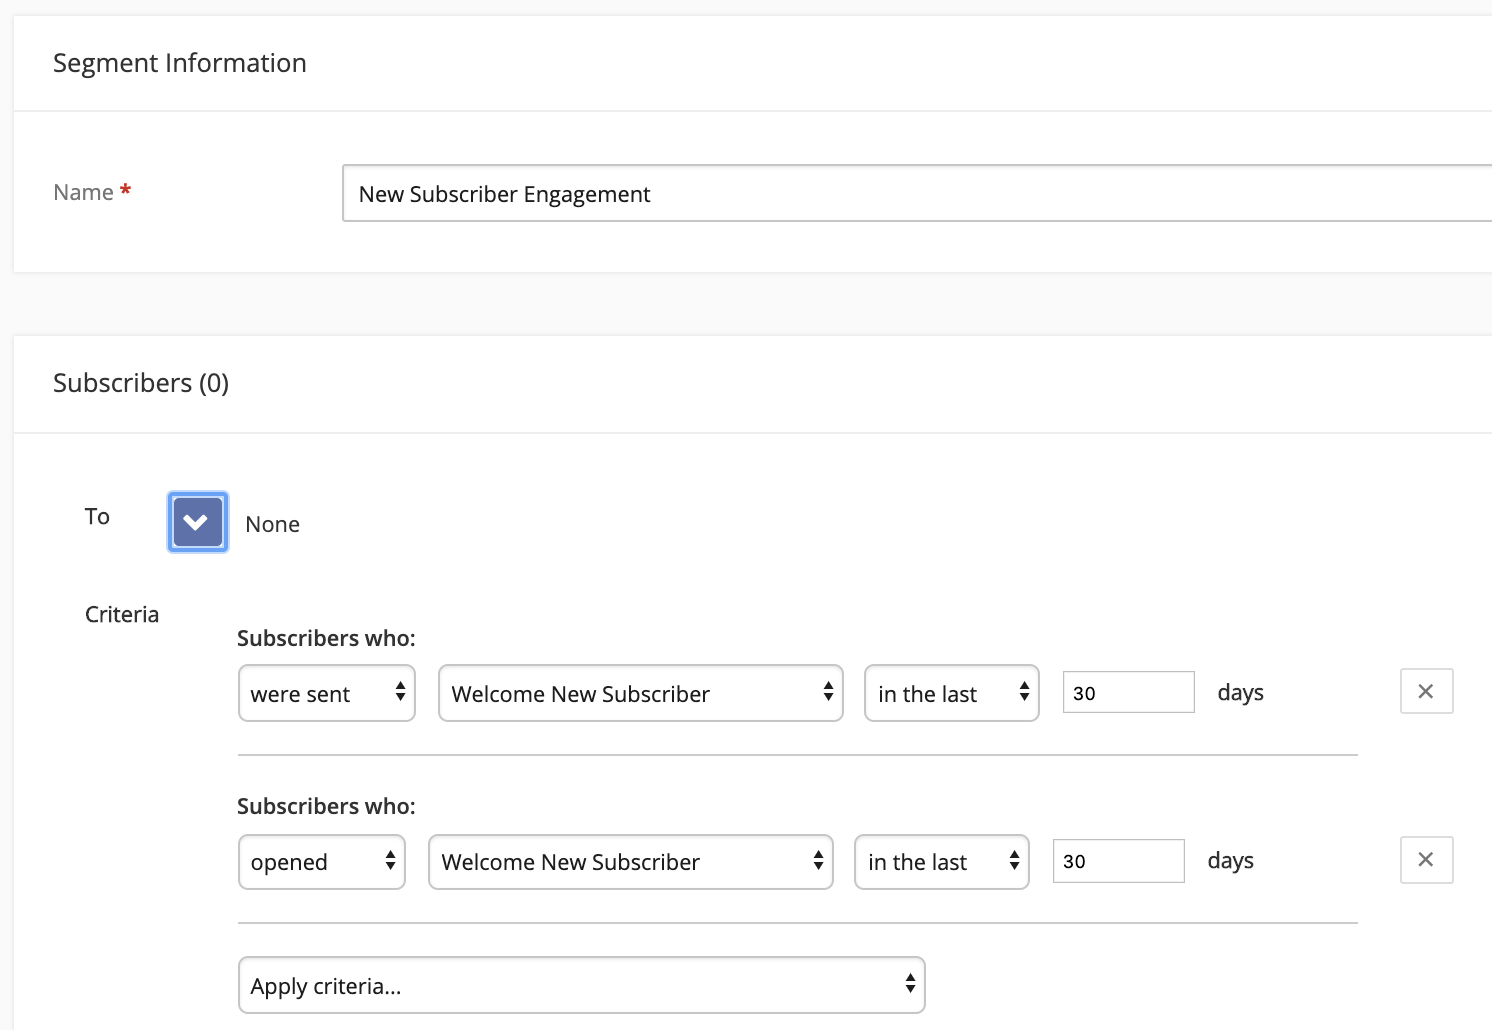 screenshot of email marketing software showing multiple segmentation criteria